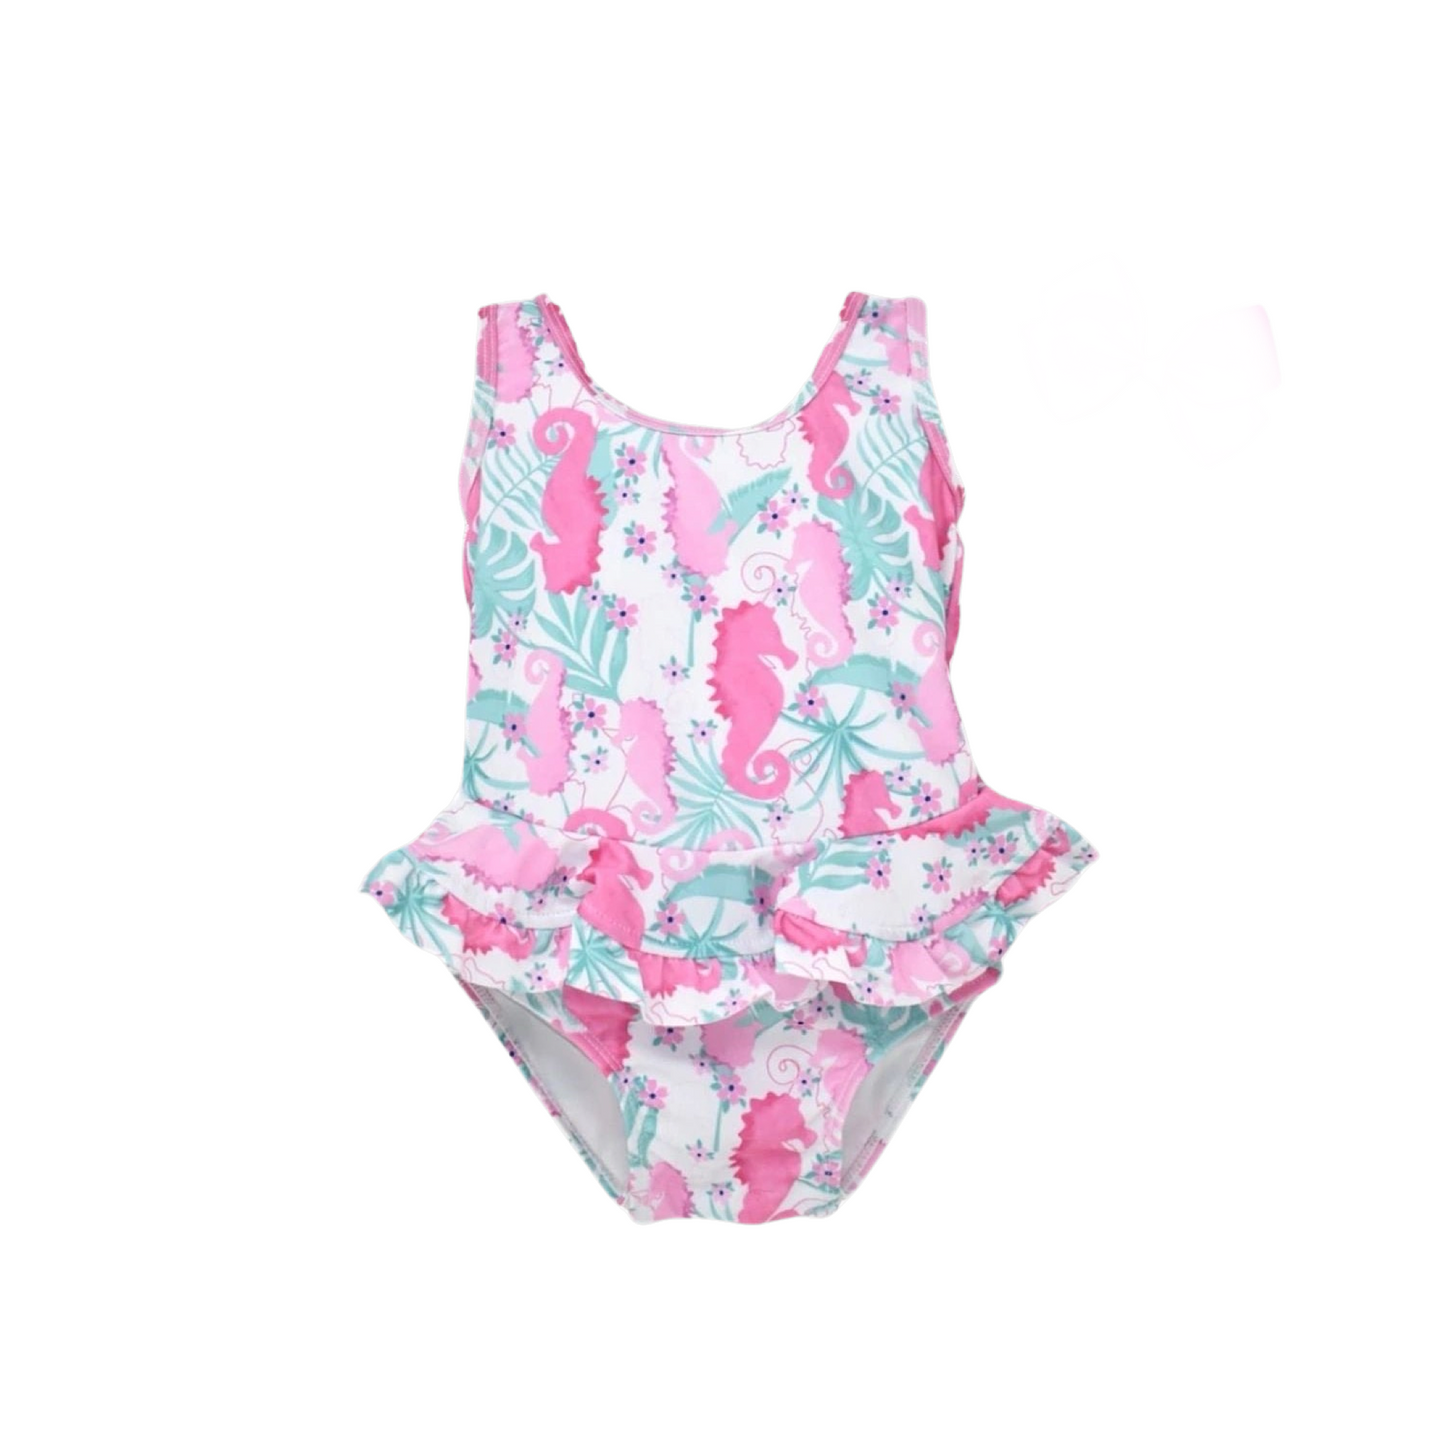 Flap Happy Girls Stella Infant Ruffle Swimsuit-D Magic Seahorse UPF 50+: 3M, 6M, 12M, 18M